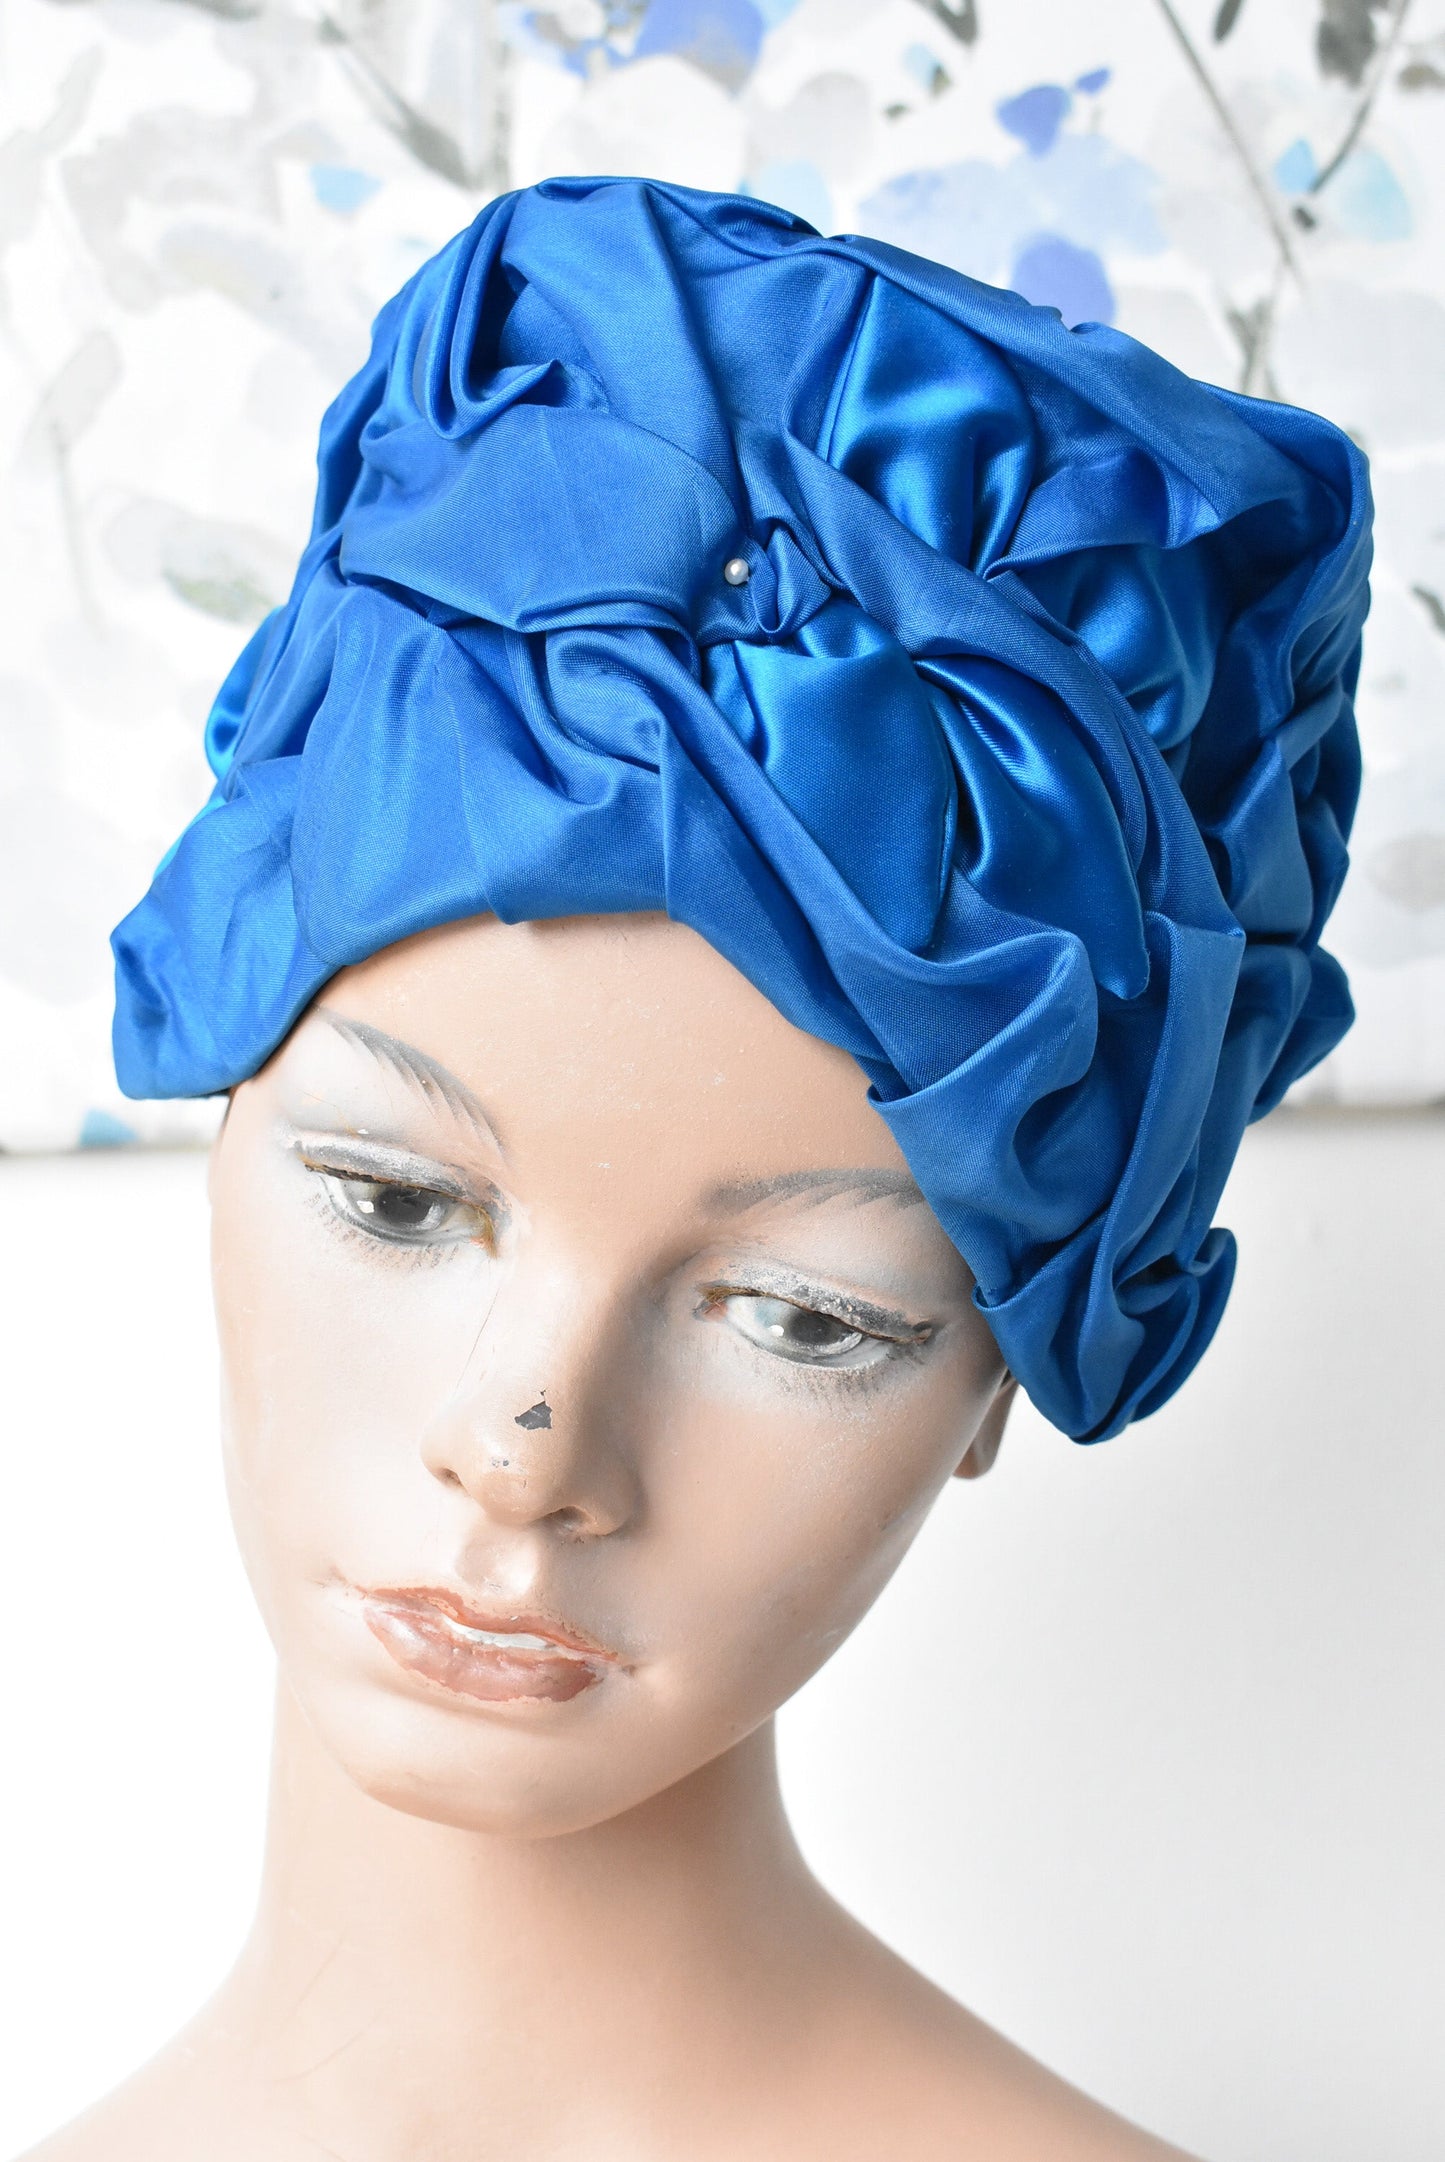 Vintage Jessica's Millinery (Dunedin) electric blue hat